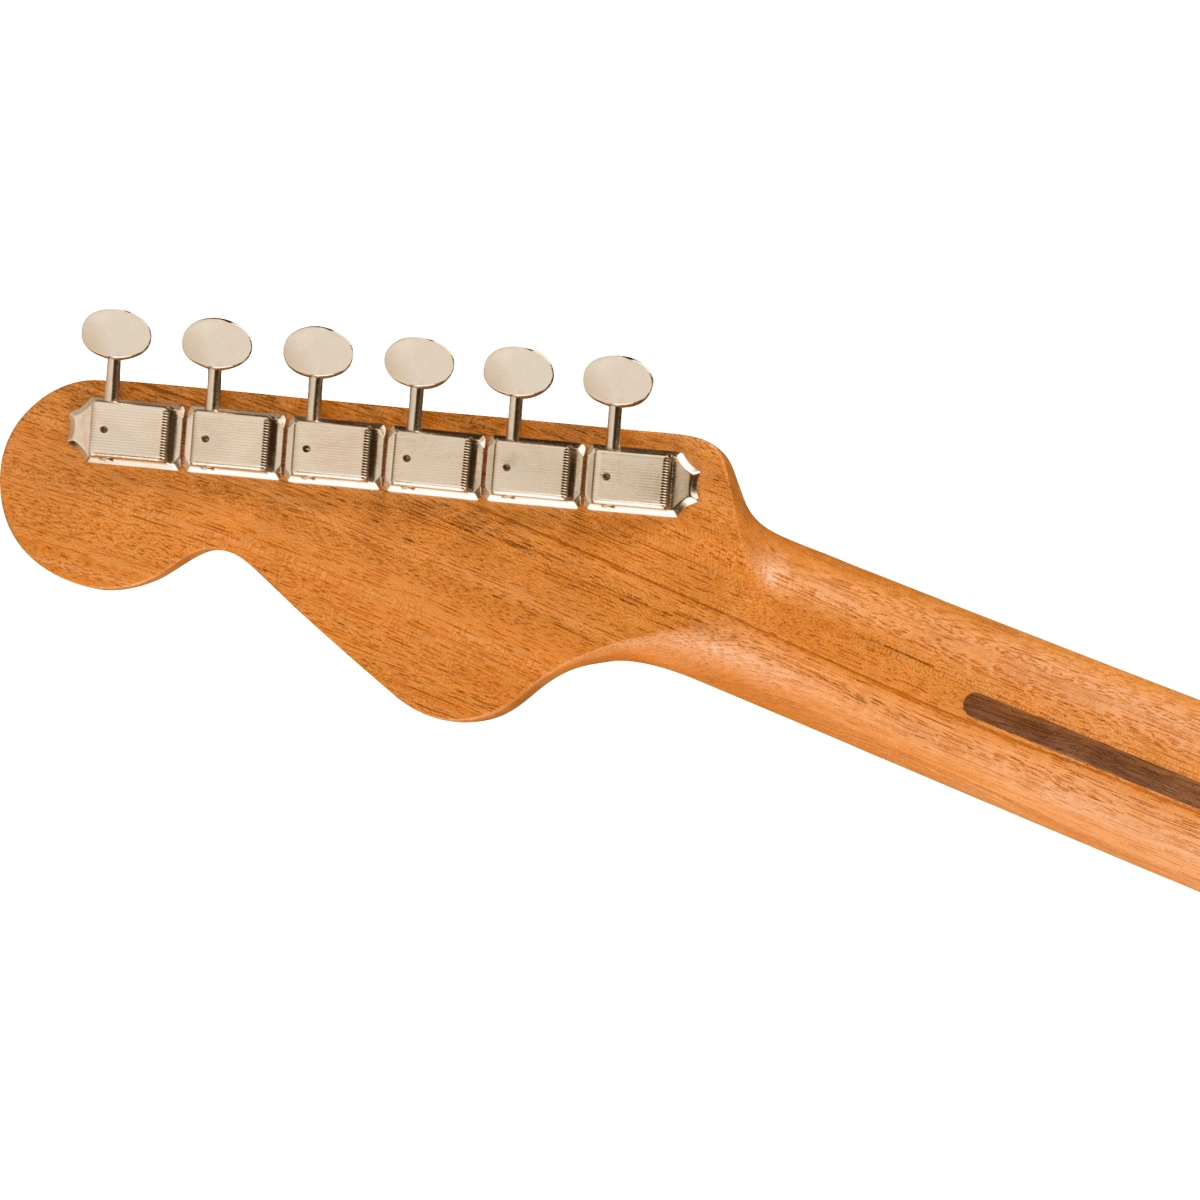 Fender / Highway Series Parlor Rosewood Fingerboard All-Mahogany